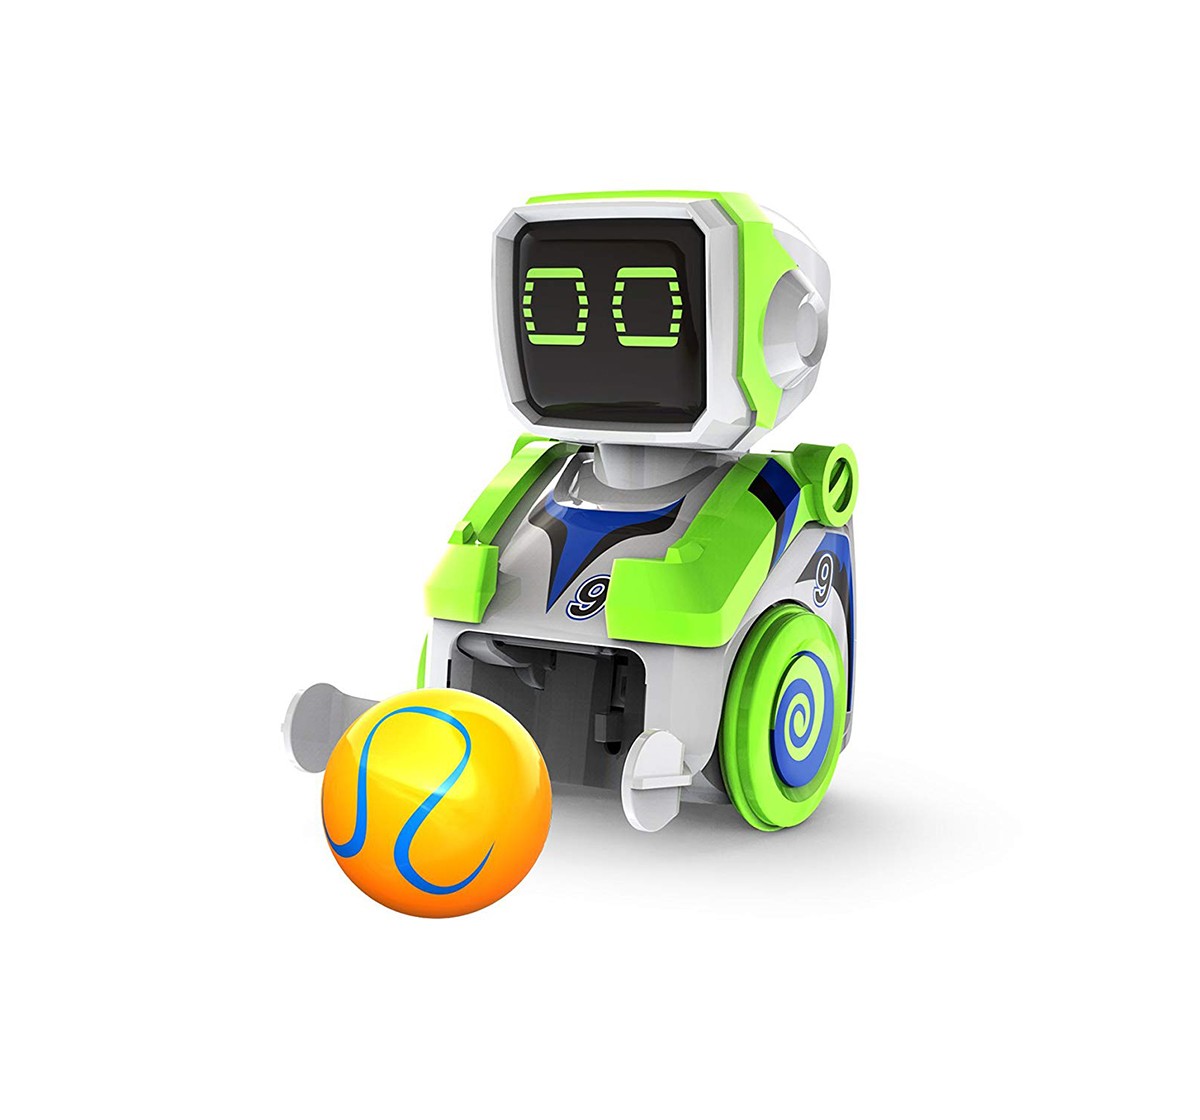 Silverlit Kickabot - A Kickoff To Robot Games Robotics for Kids age 3Y+ (White)